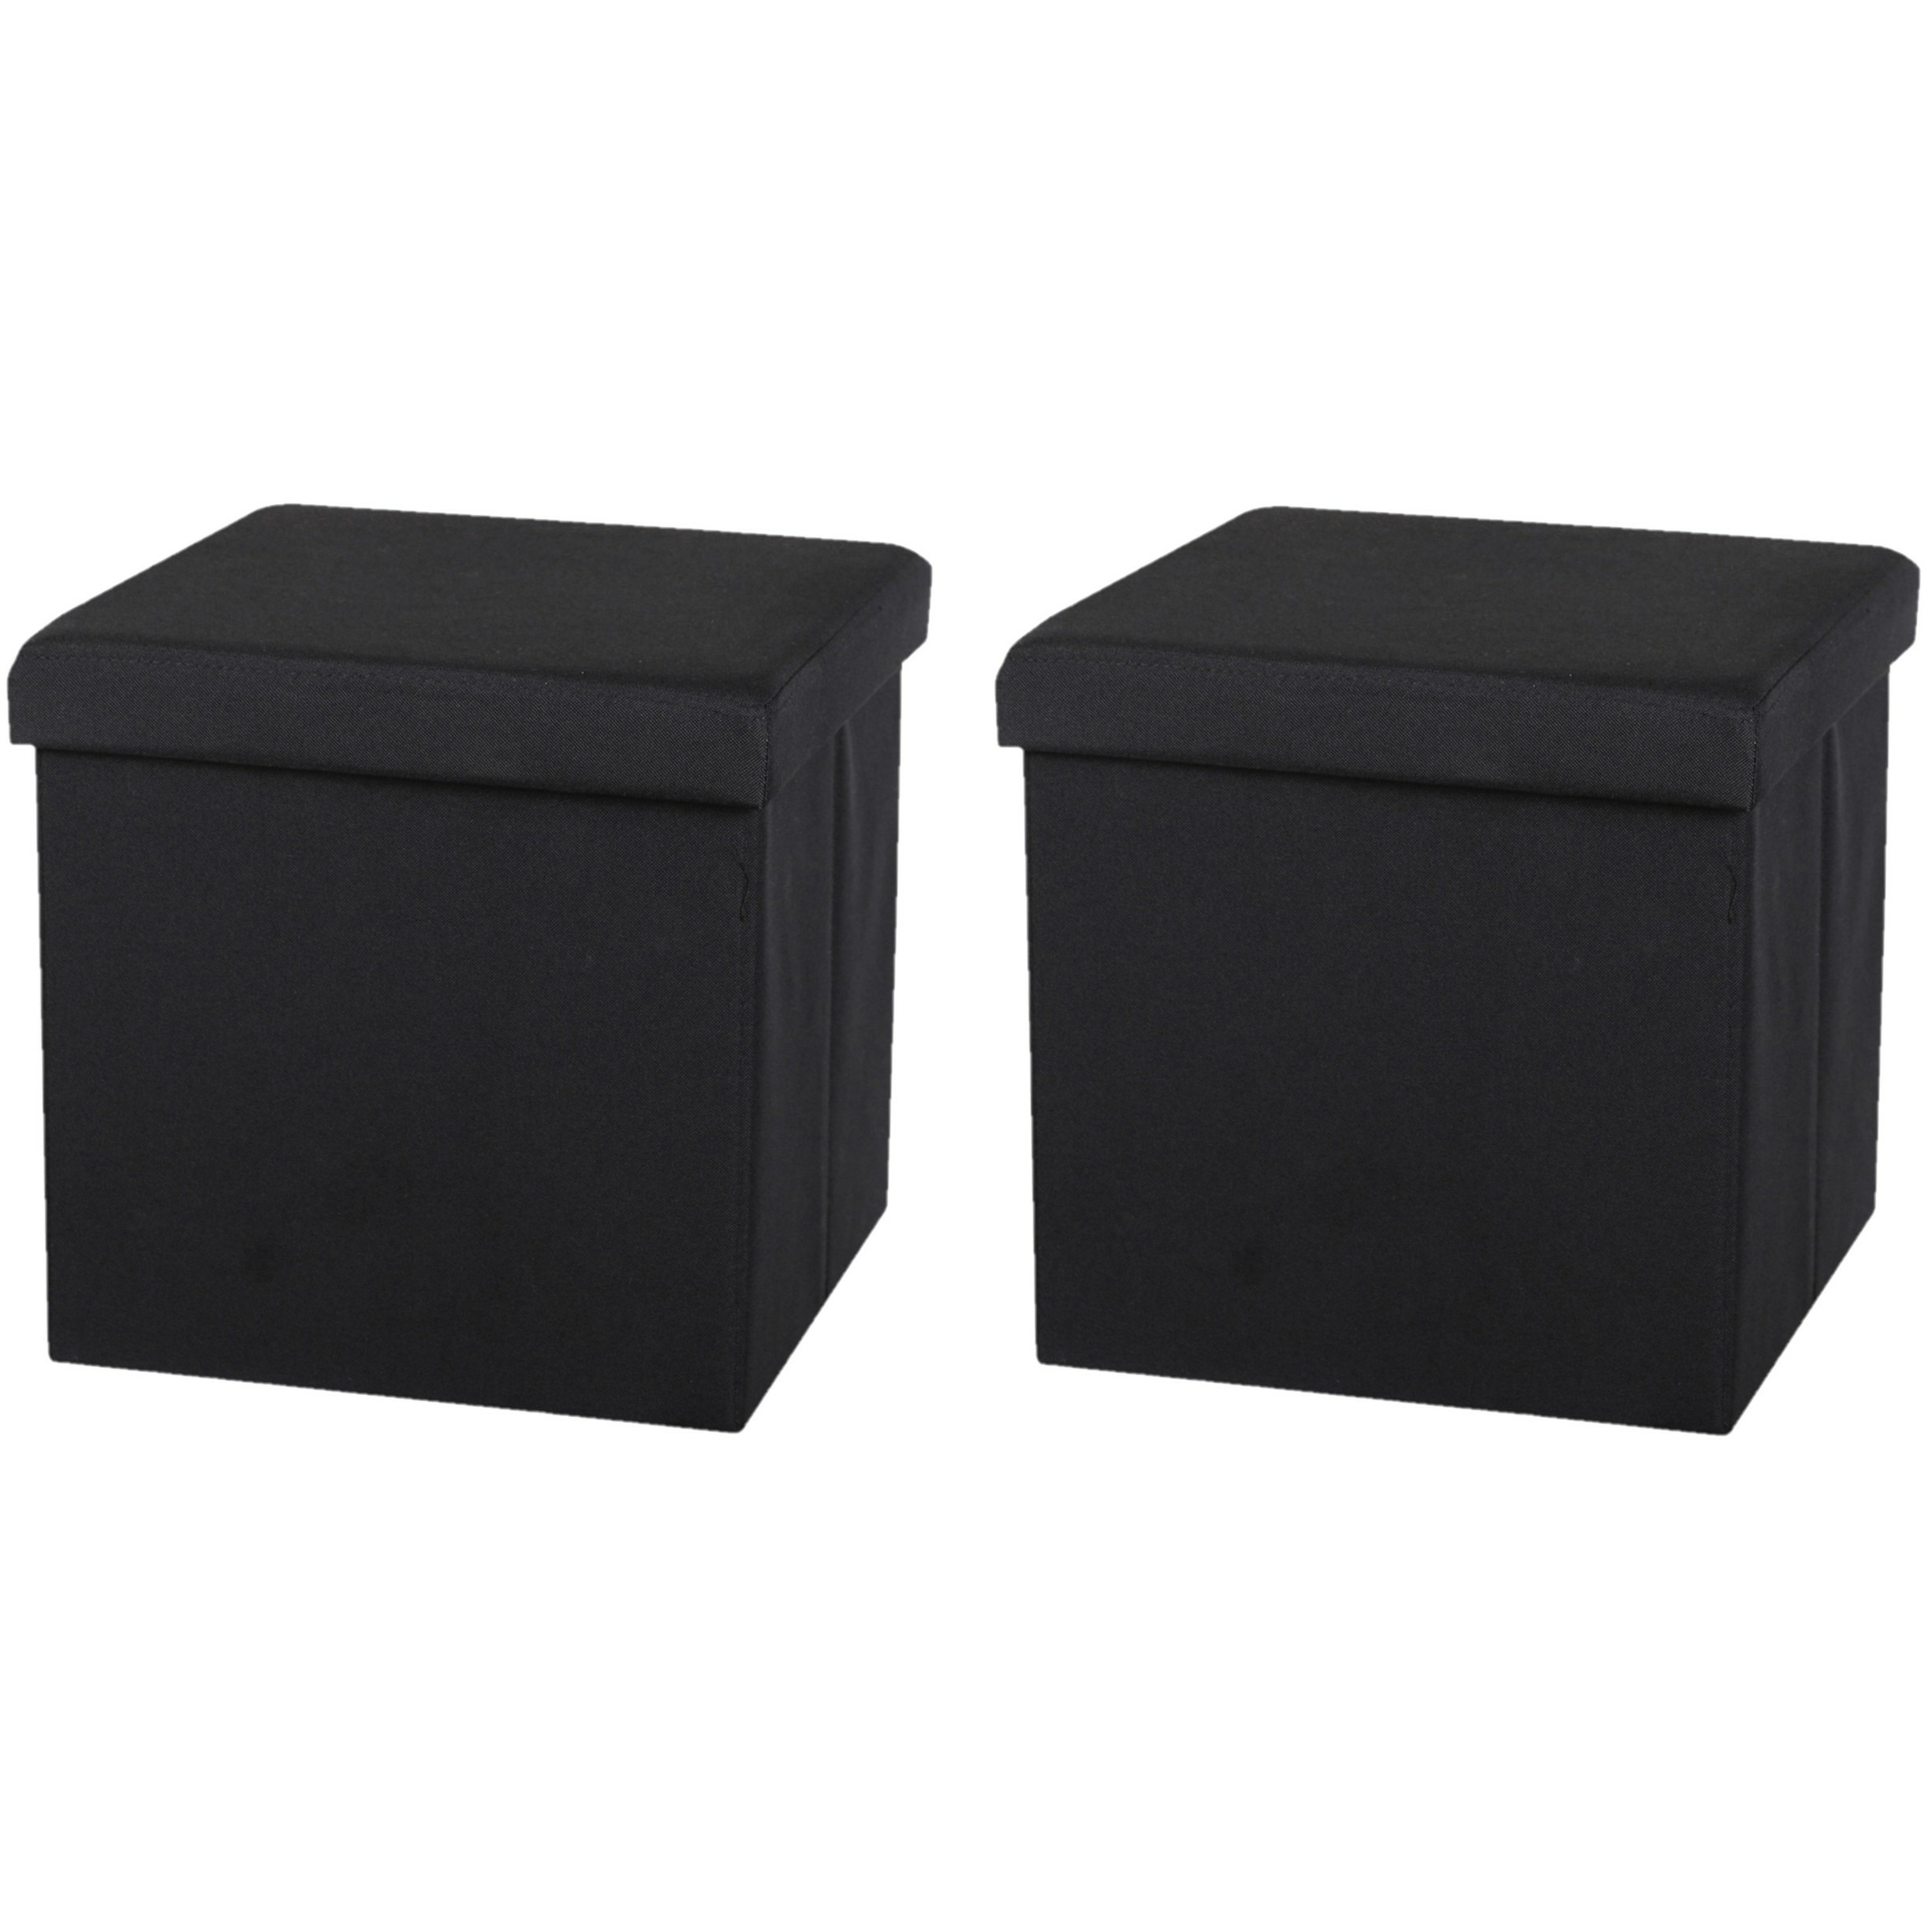 Urban Living Poef-hocker 2x opbergbox zit krukje zwart linnen-mdf 37 x 37 cm opvouwbaar